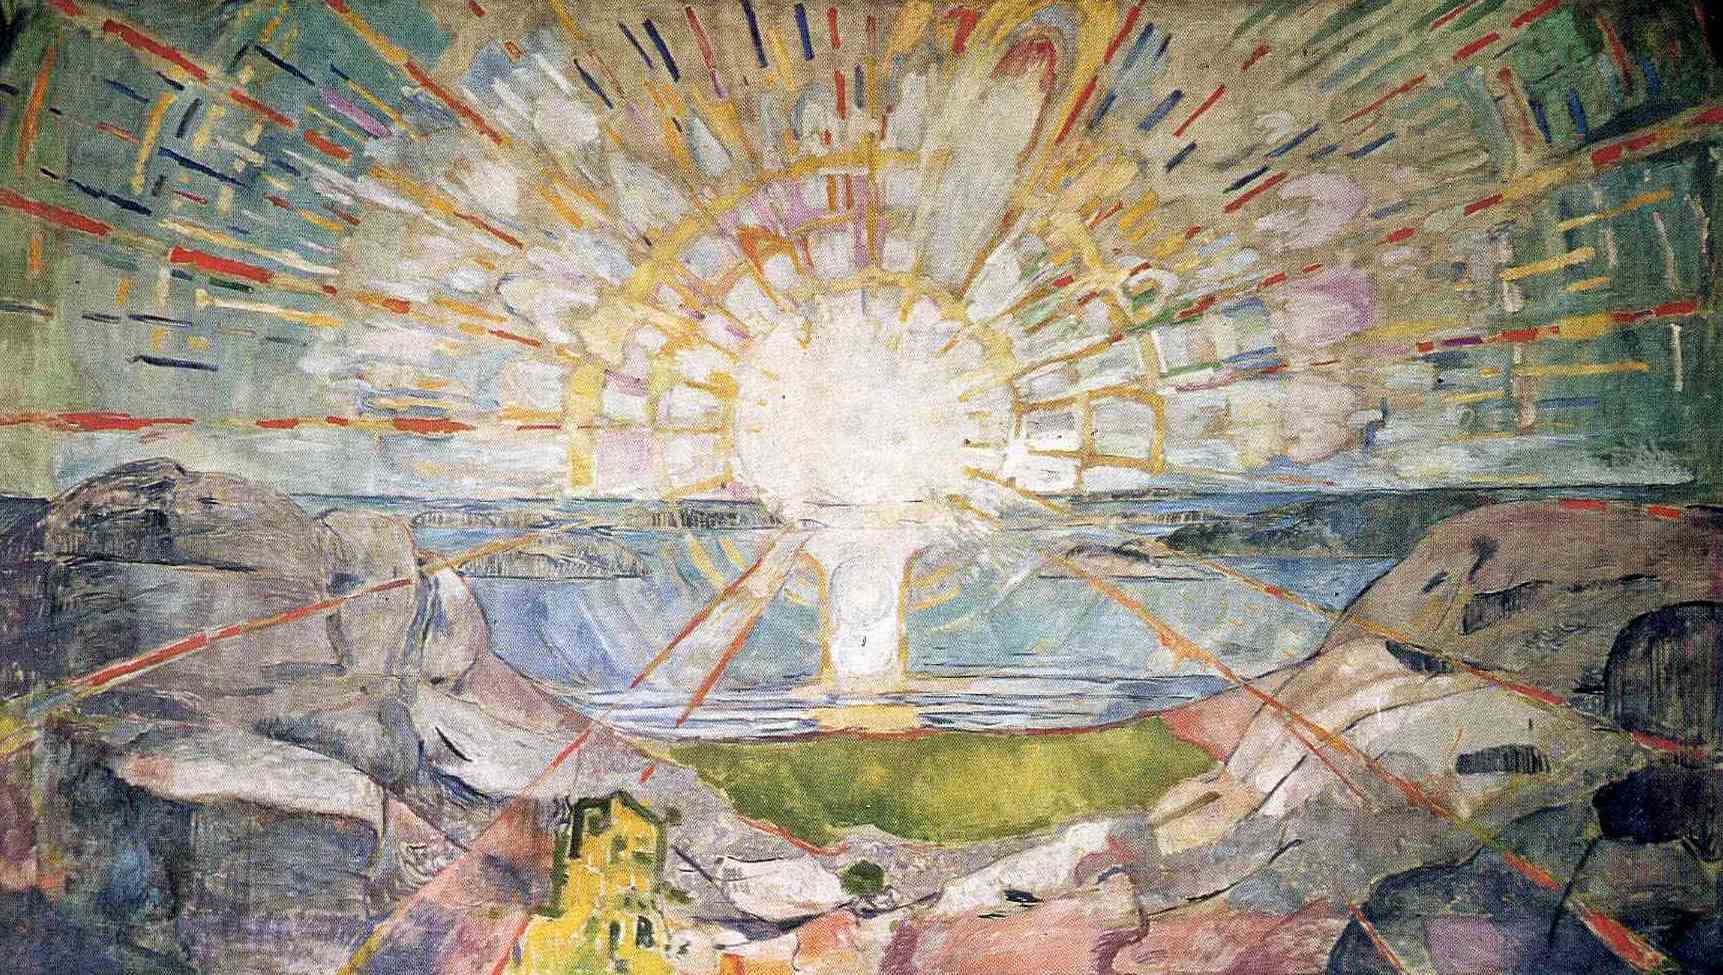 Эдвард Мунк. "Солнце". 1916. Университет Осло, Осло.